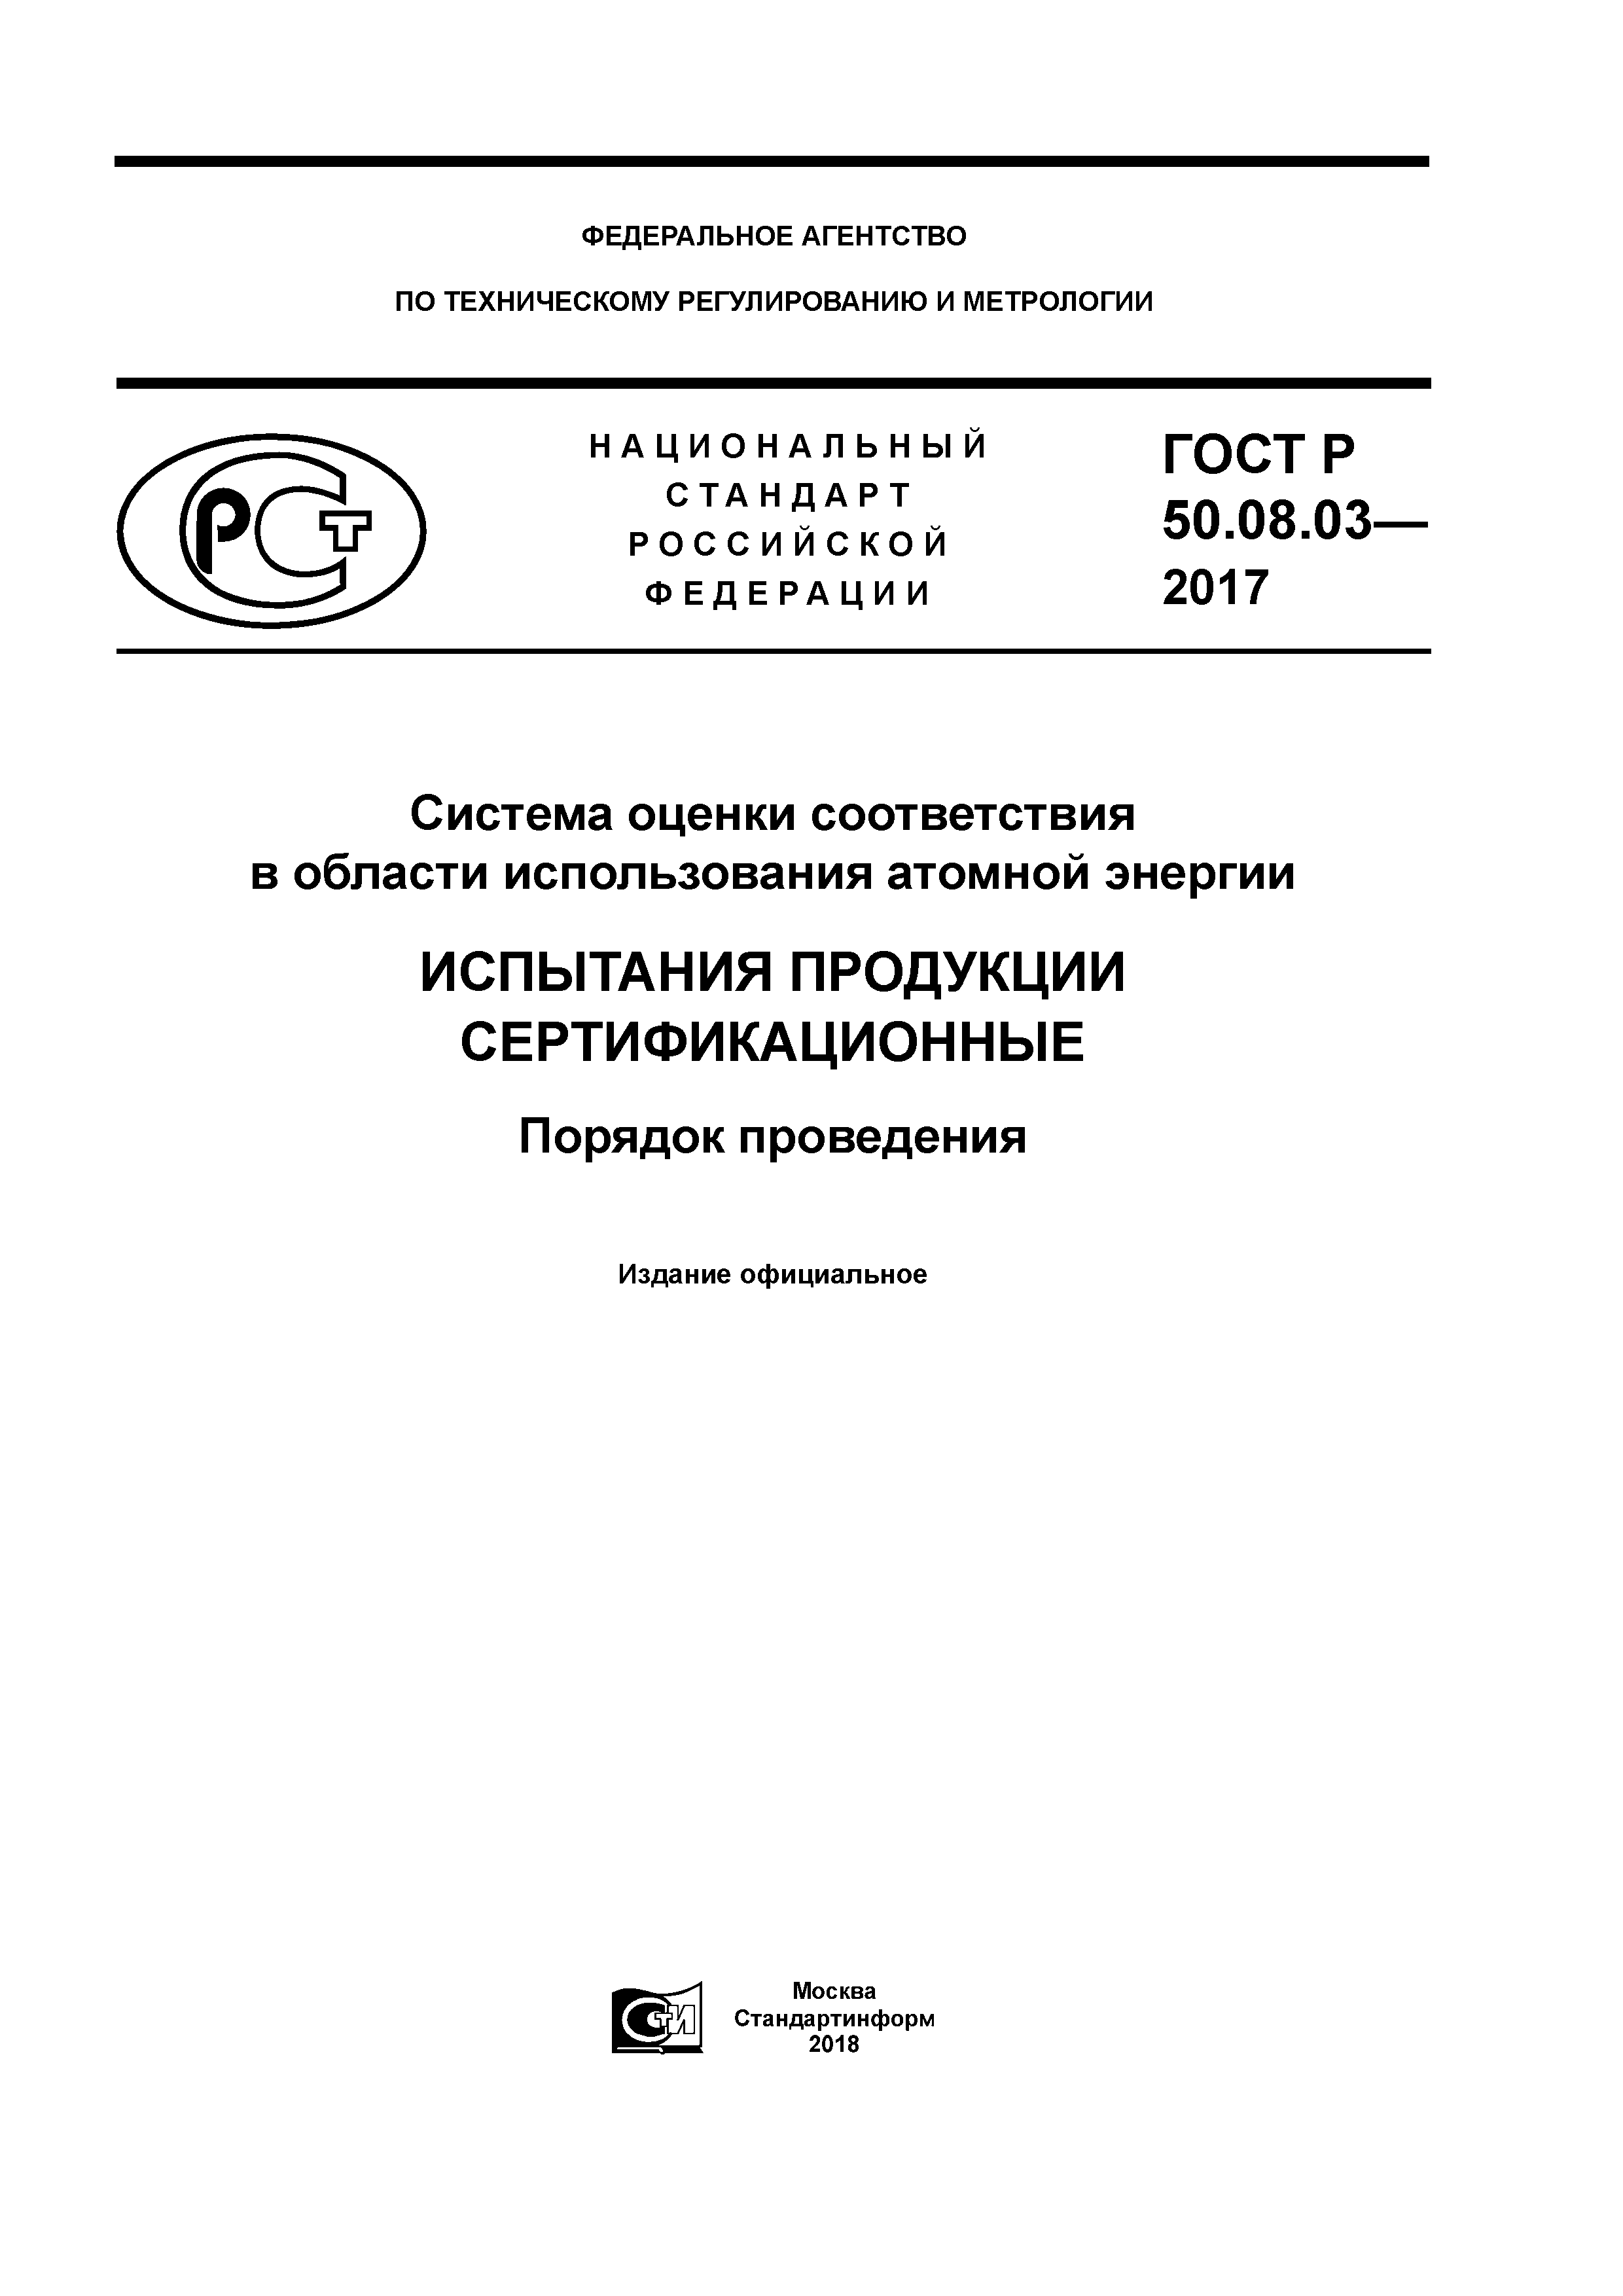 ГОСТ Р 50.08.03-2017